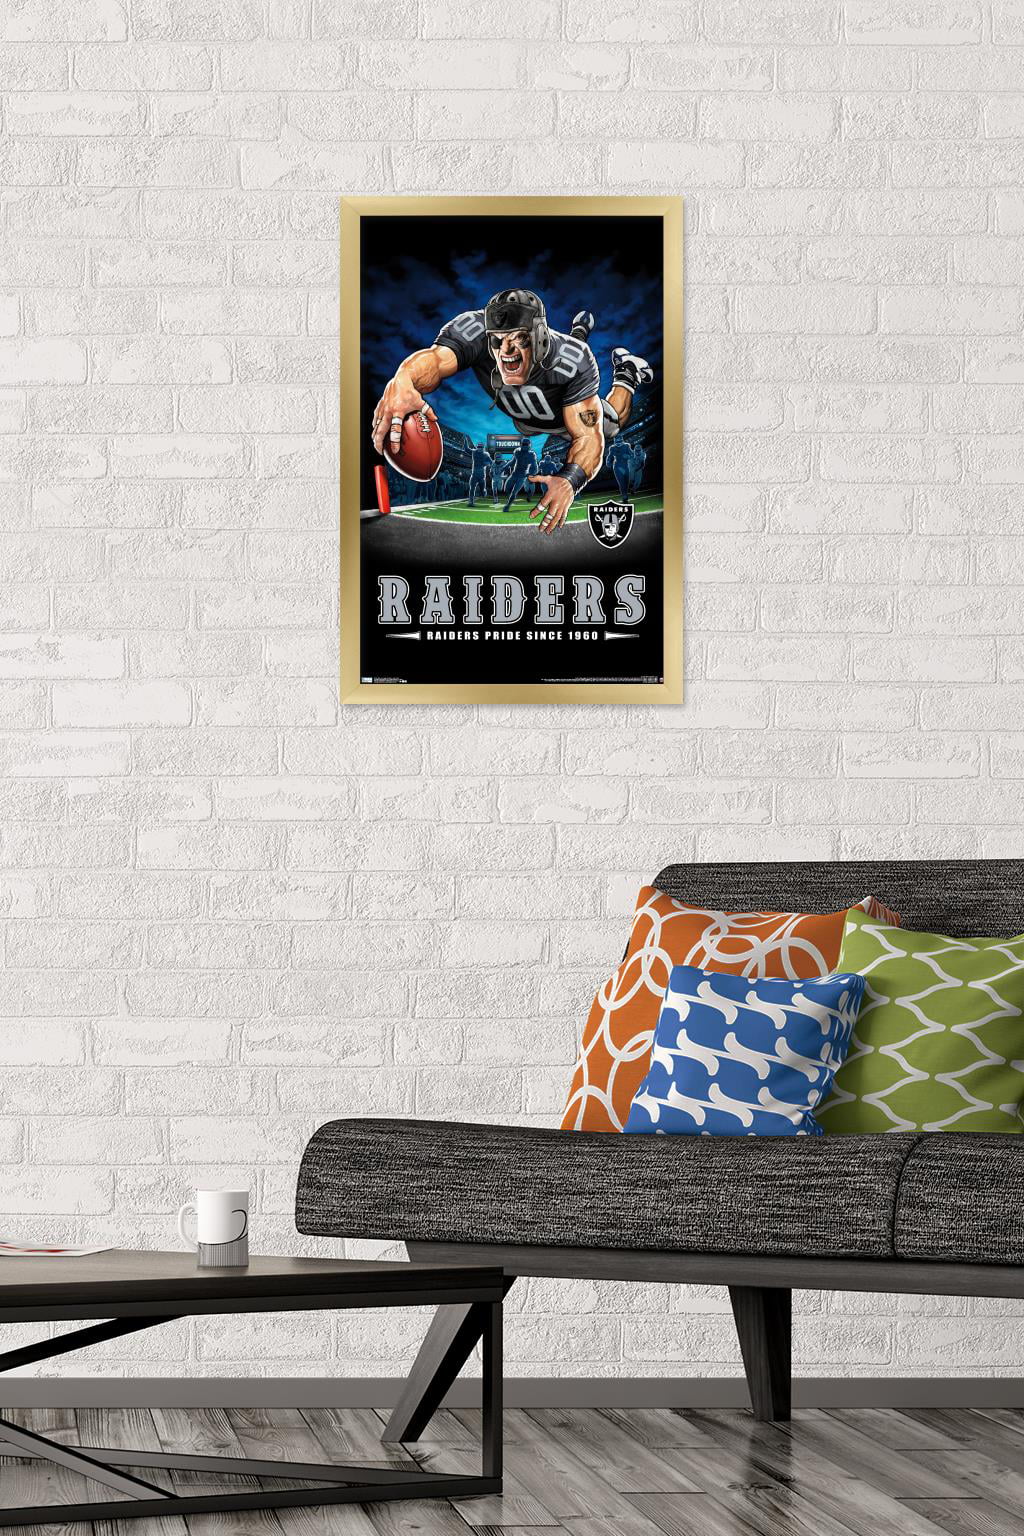 Trends International NFL Las Vegas Raiders – End Zone 20 Wall Poster,  22.375 x 34, Black Framed Version